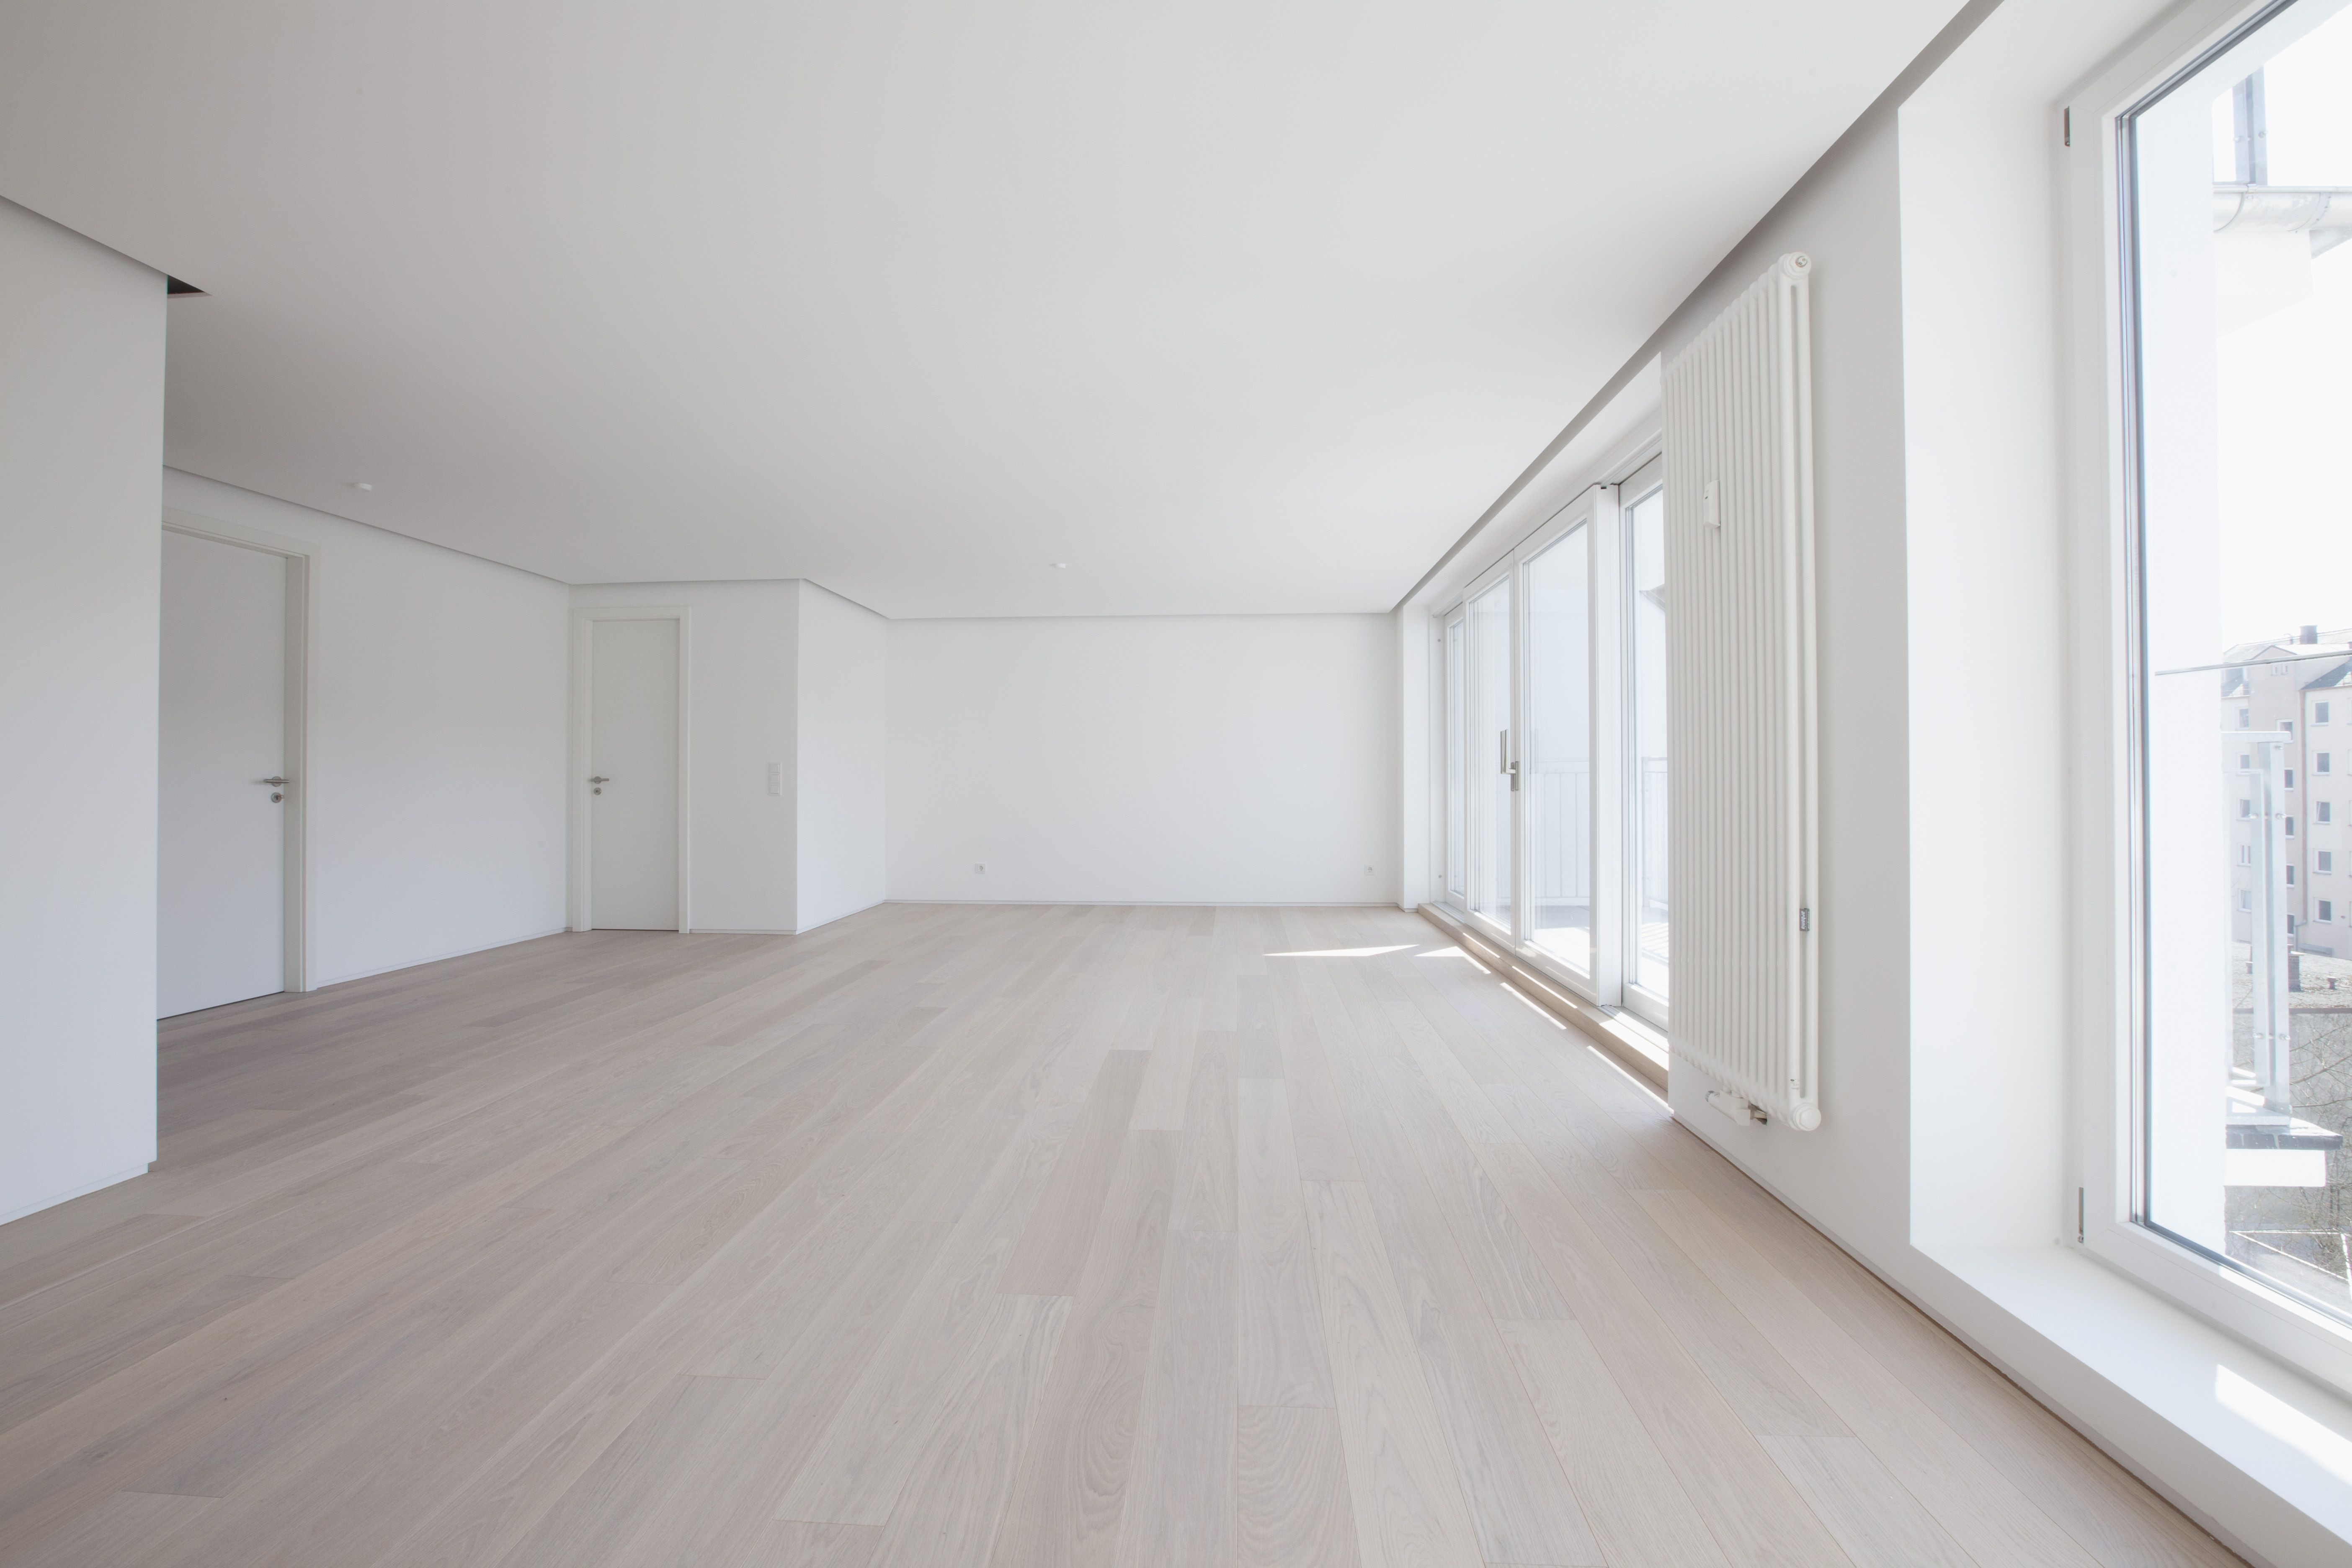 Sanding Hardwood Floors by Hand Of Basics Of Favorite Hybrid Engineered Wood Floors In Empty Living Room In Modern Apartment 578189139 58866f903df78c2ccdecab05